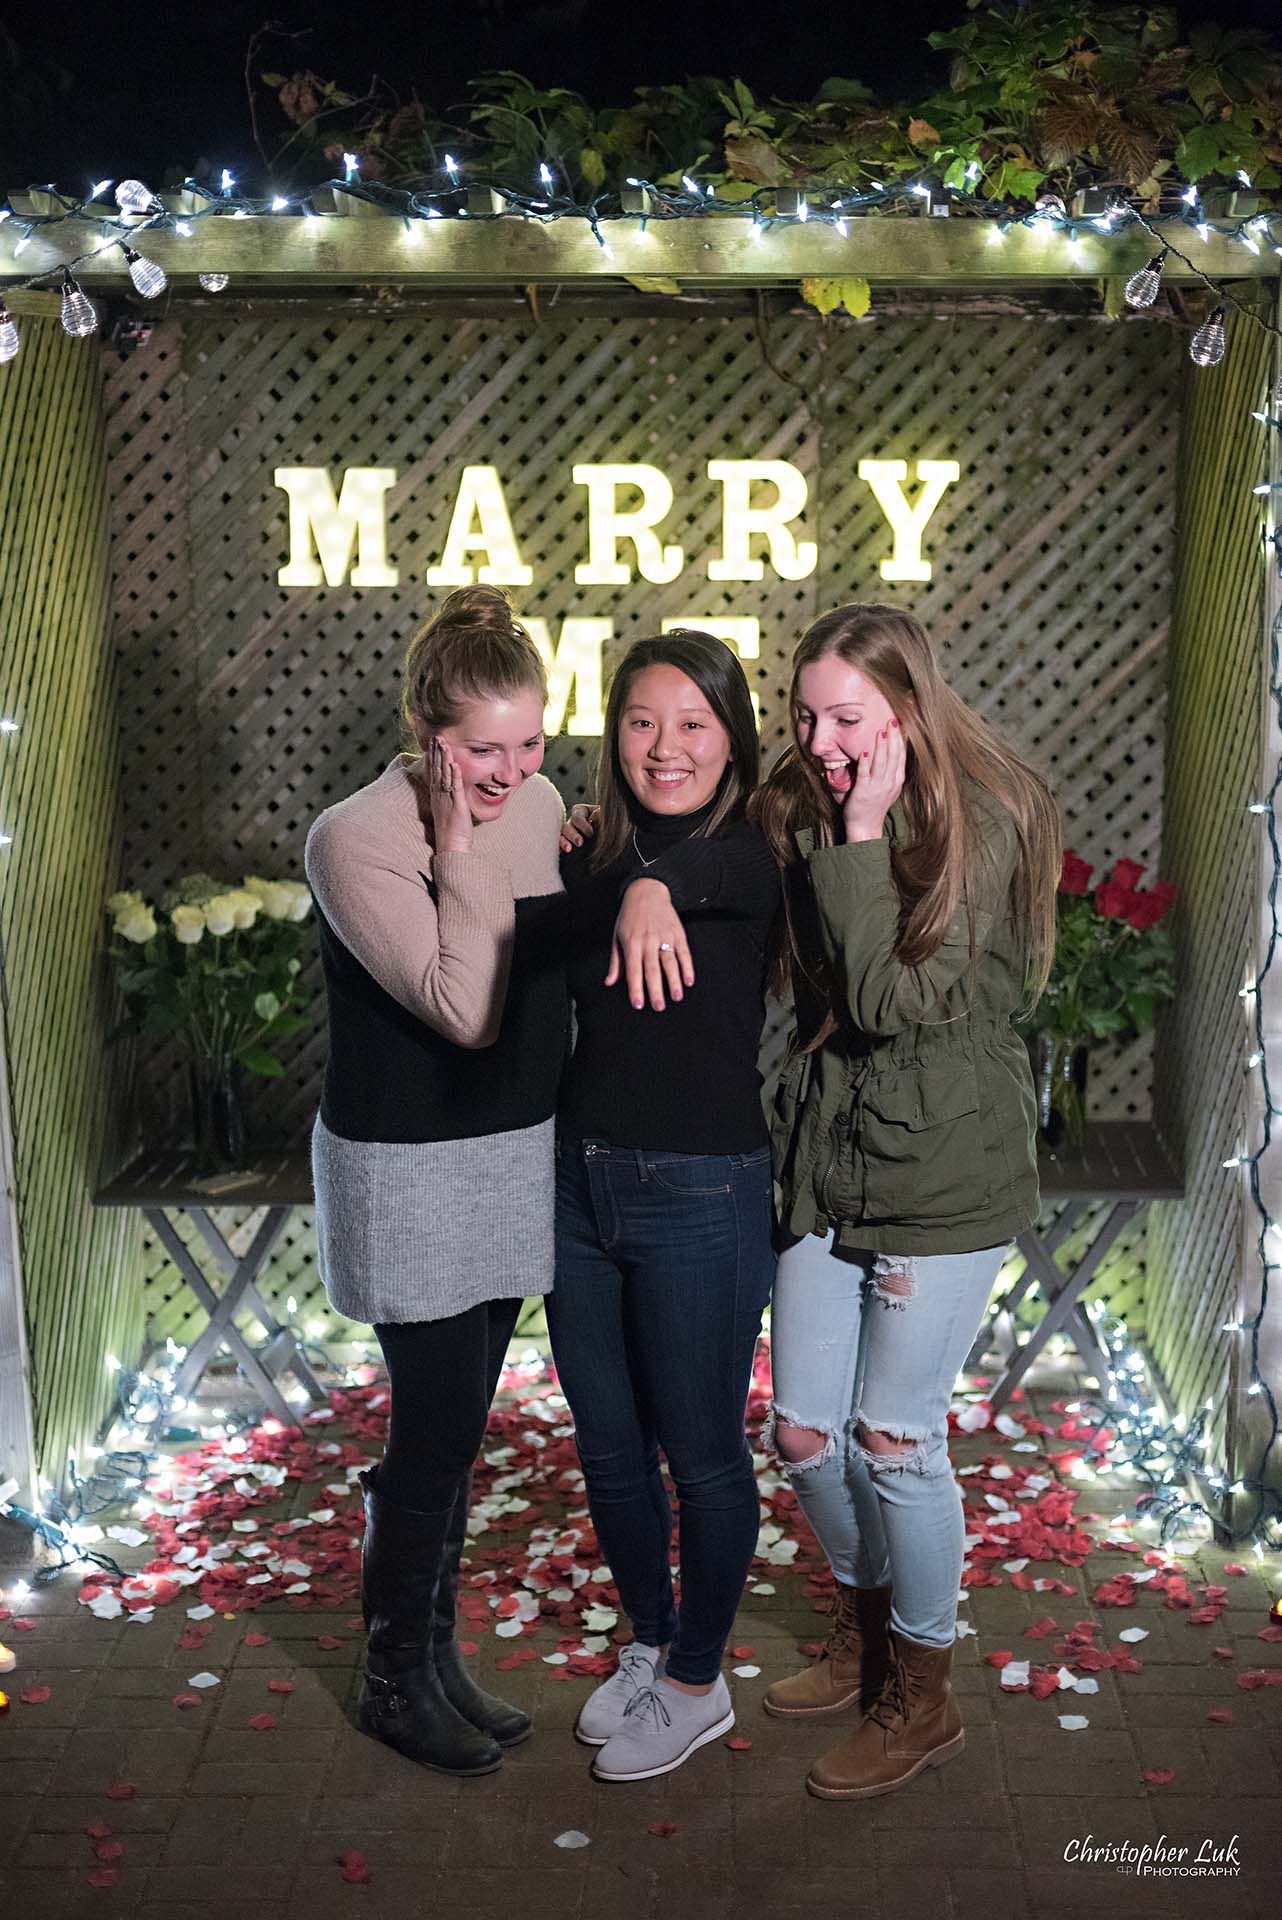 Christopher Luk Toronto Wedding Photographer - Backyard Surprise Proposal Engaged Engagement Gazebo Christmas Fairy Twinkle Lights Flower Petals Marry Me - Bride Sisters Ring Wow